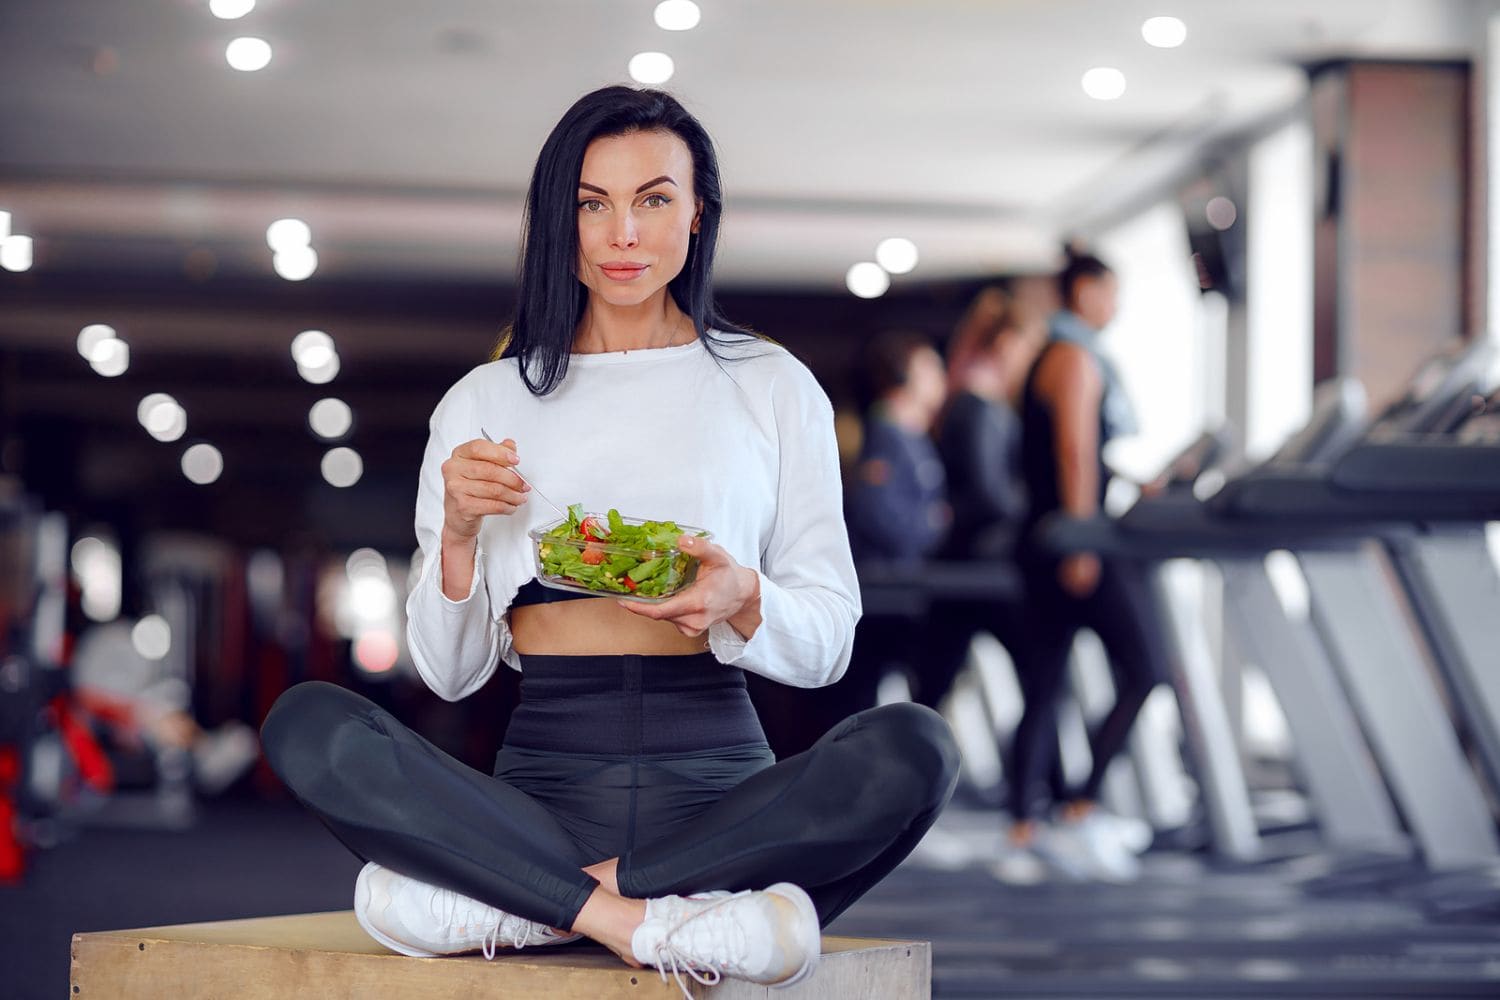 femme mange une salade dans une salle de sport